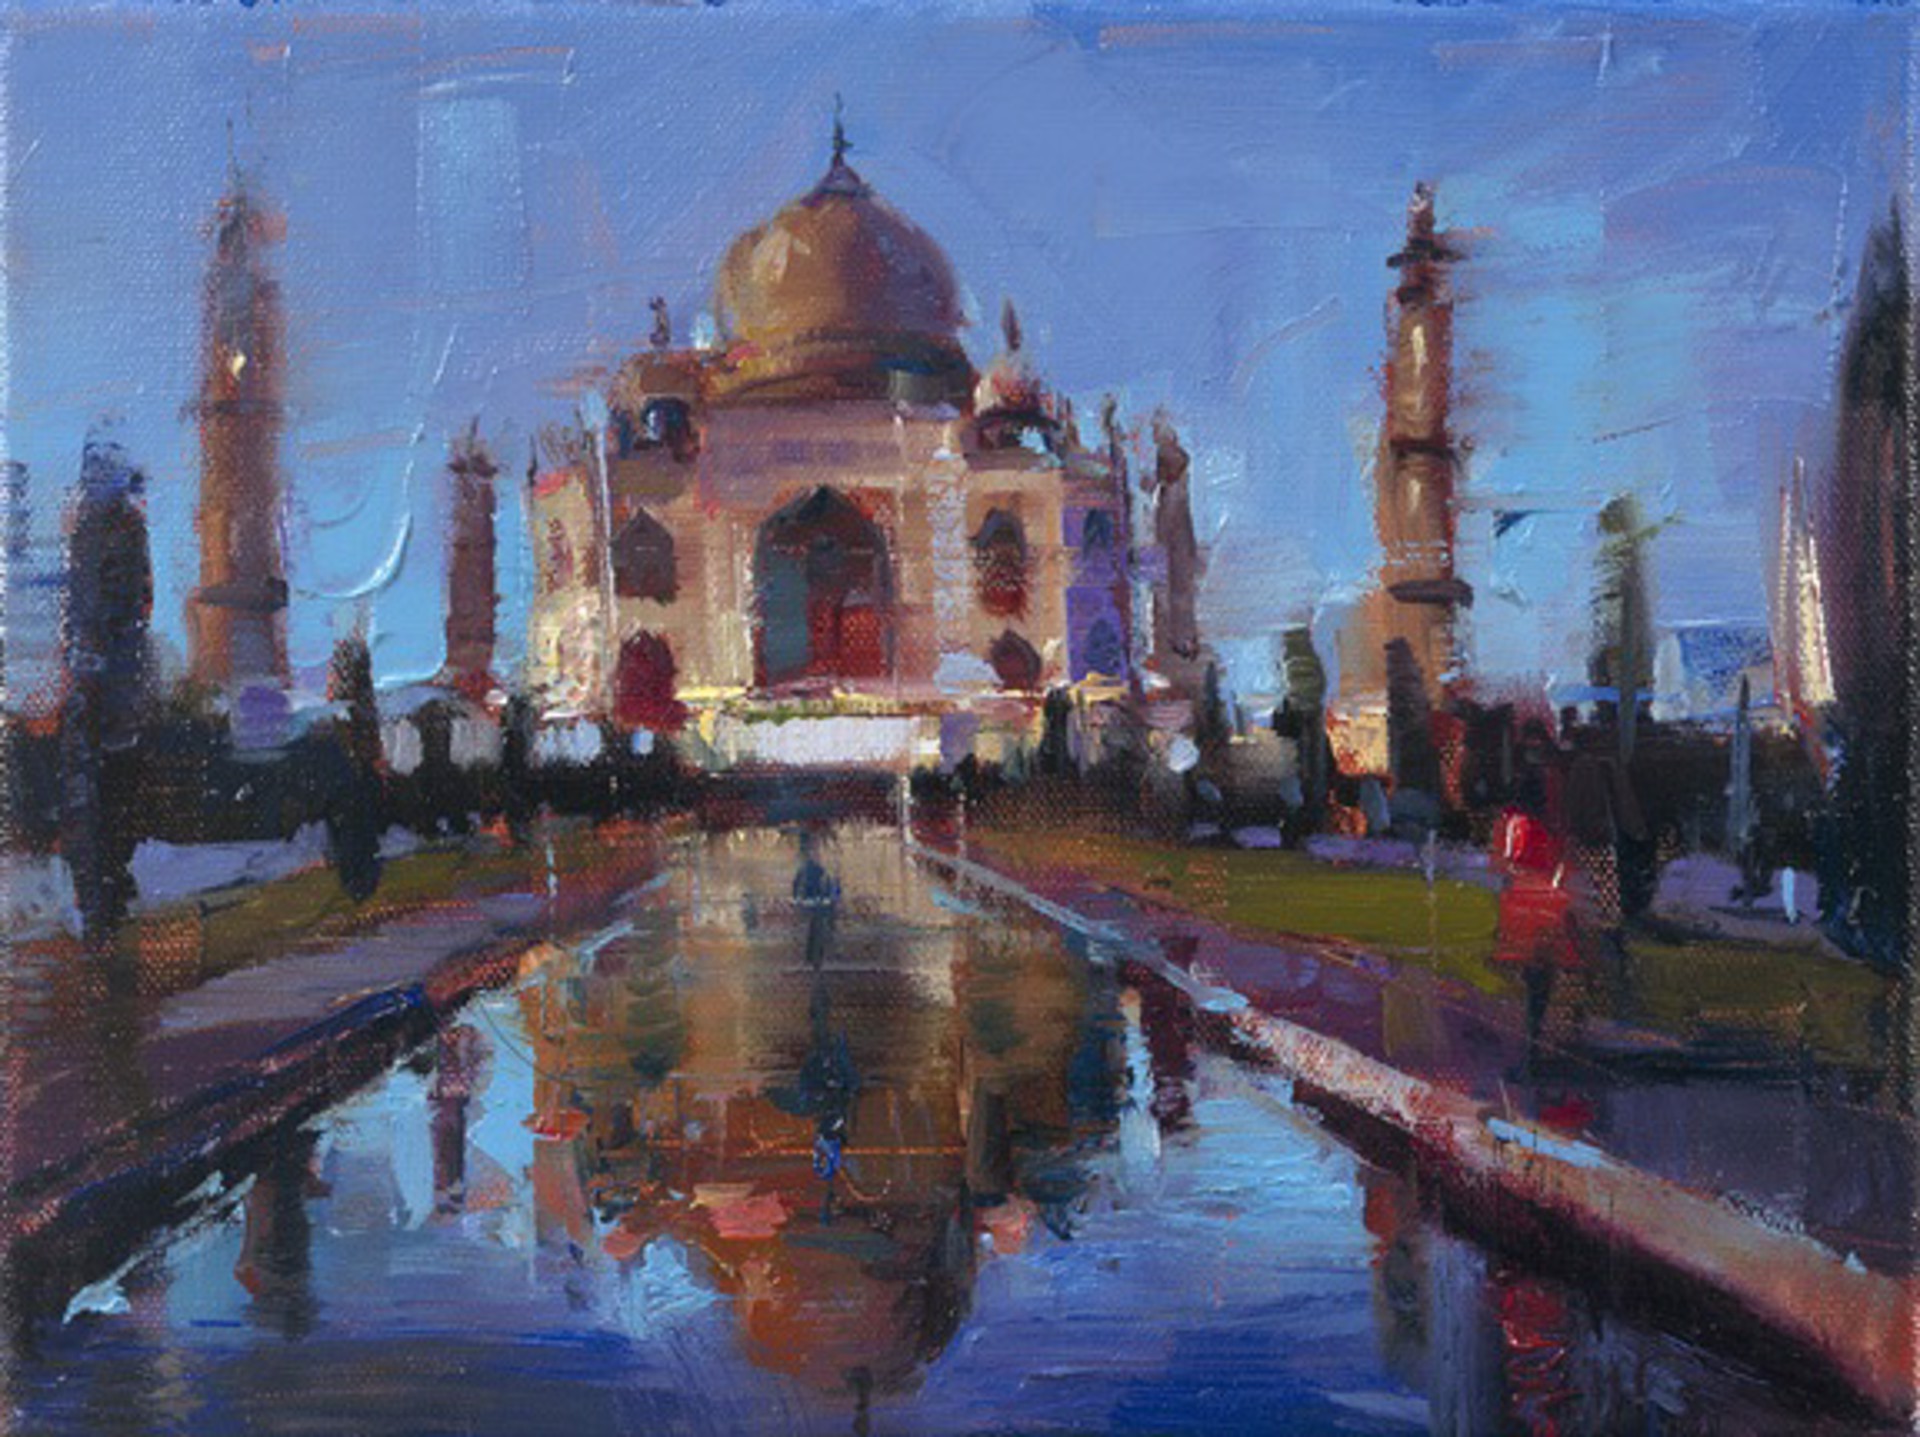 Taj Mahal Postcards From Around the World by Michael Flohr